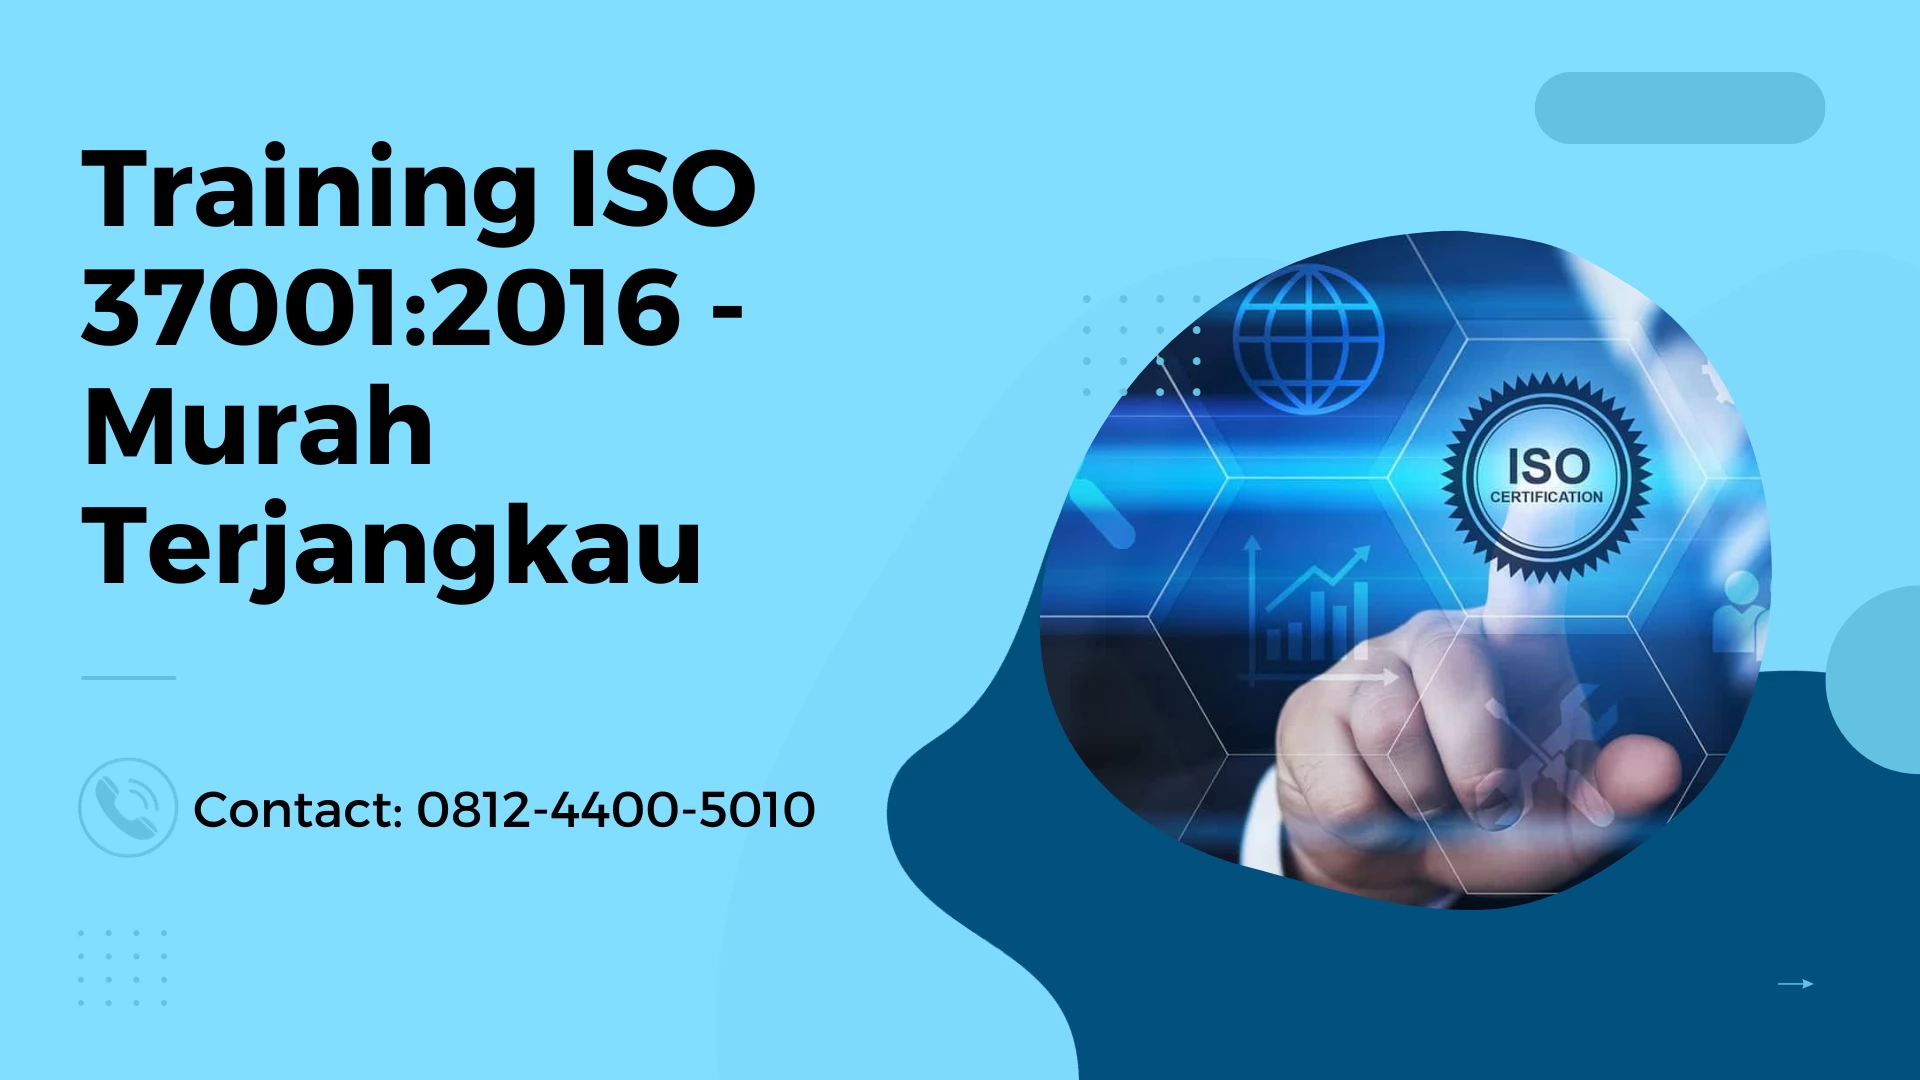 Training ISO 37001:2016 - Murah Terjangkau